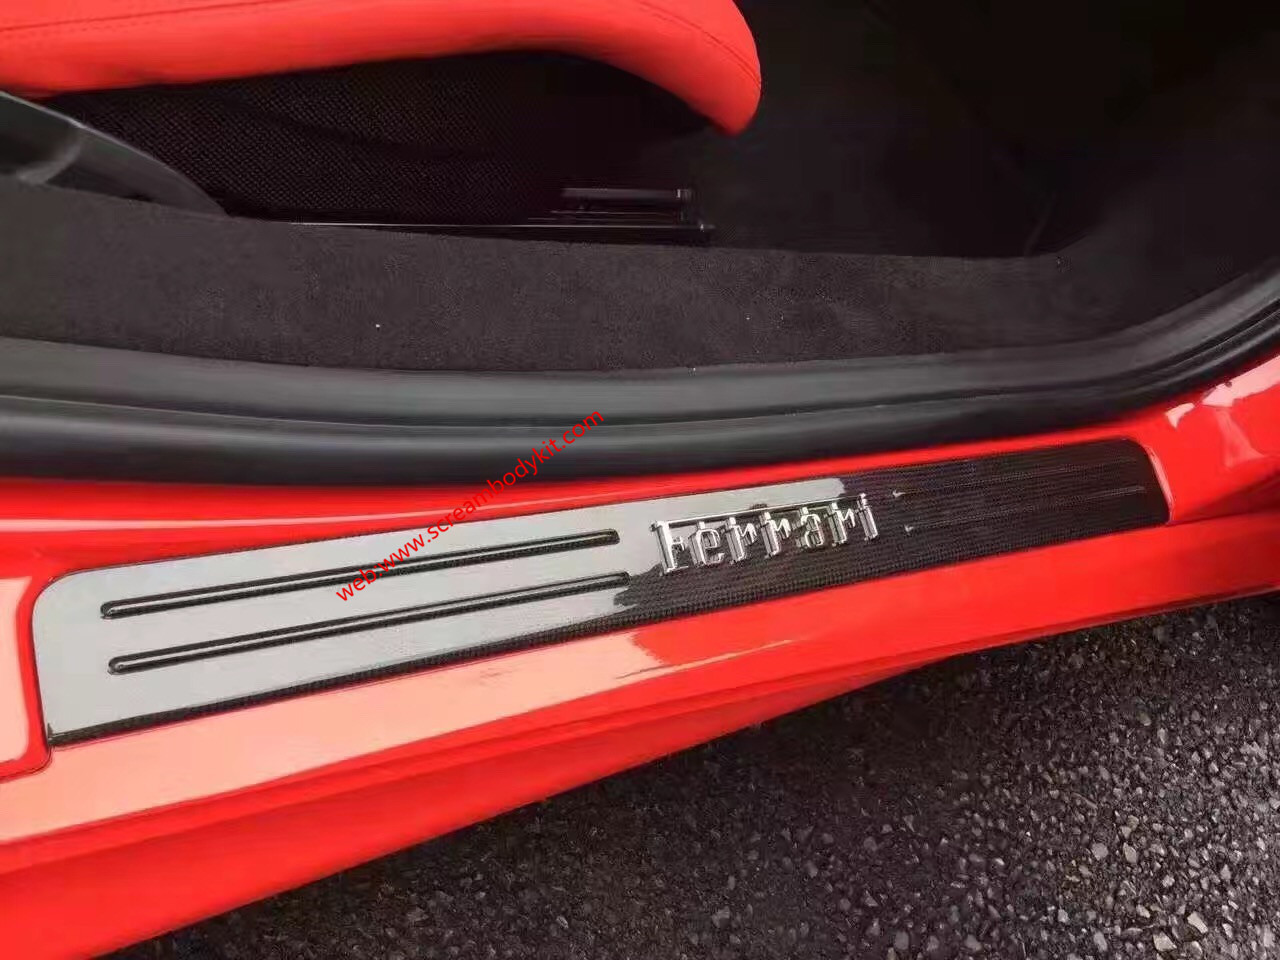 Ferrari F488 update carbon fiber interior trim and other carbon fiber parts